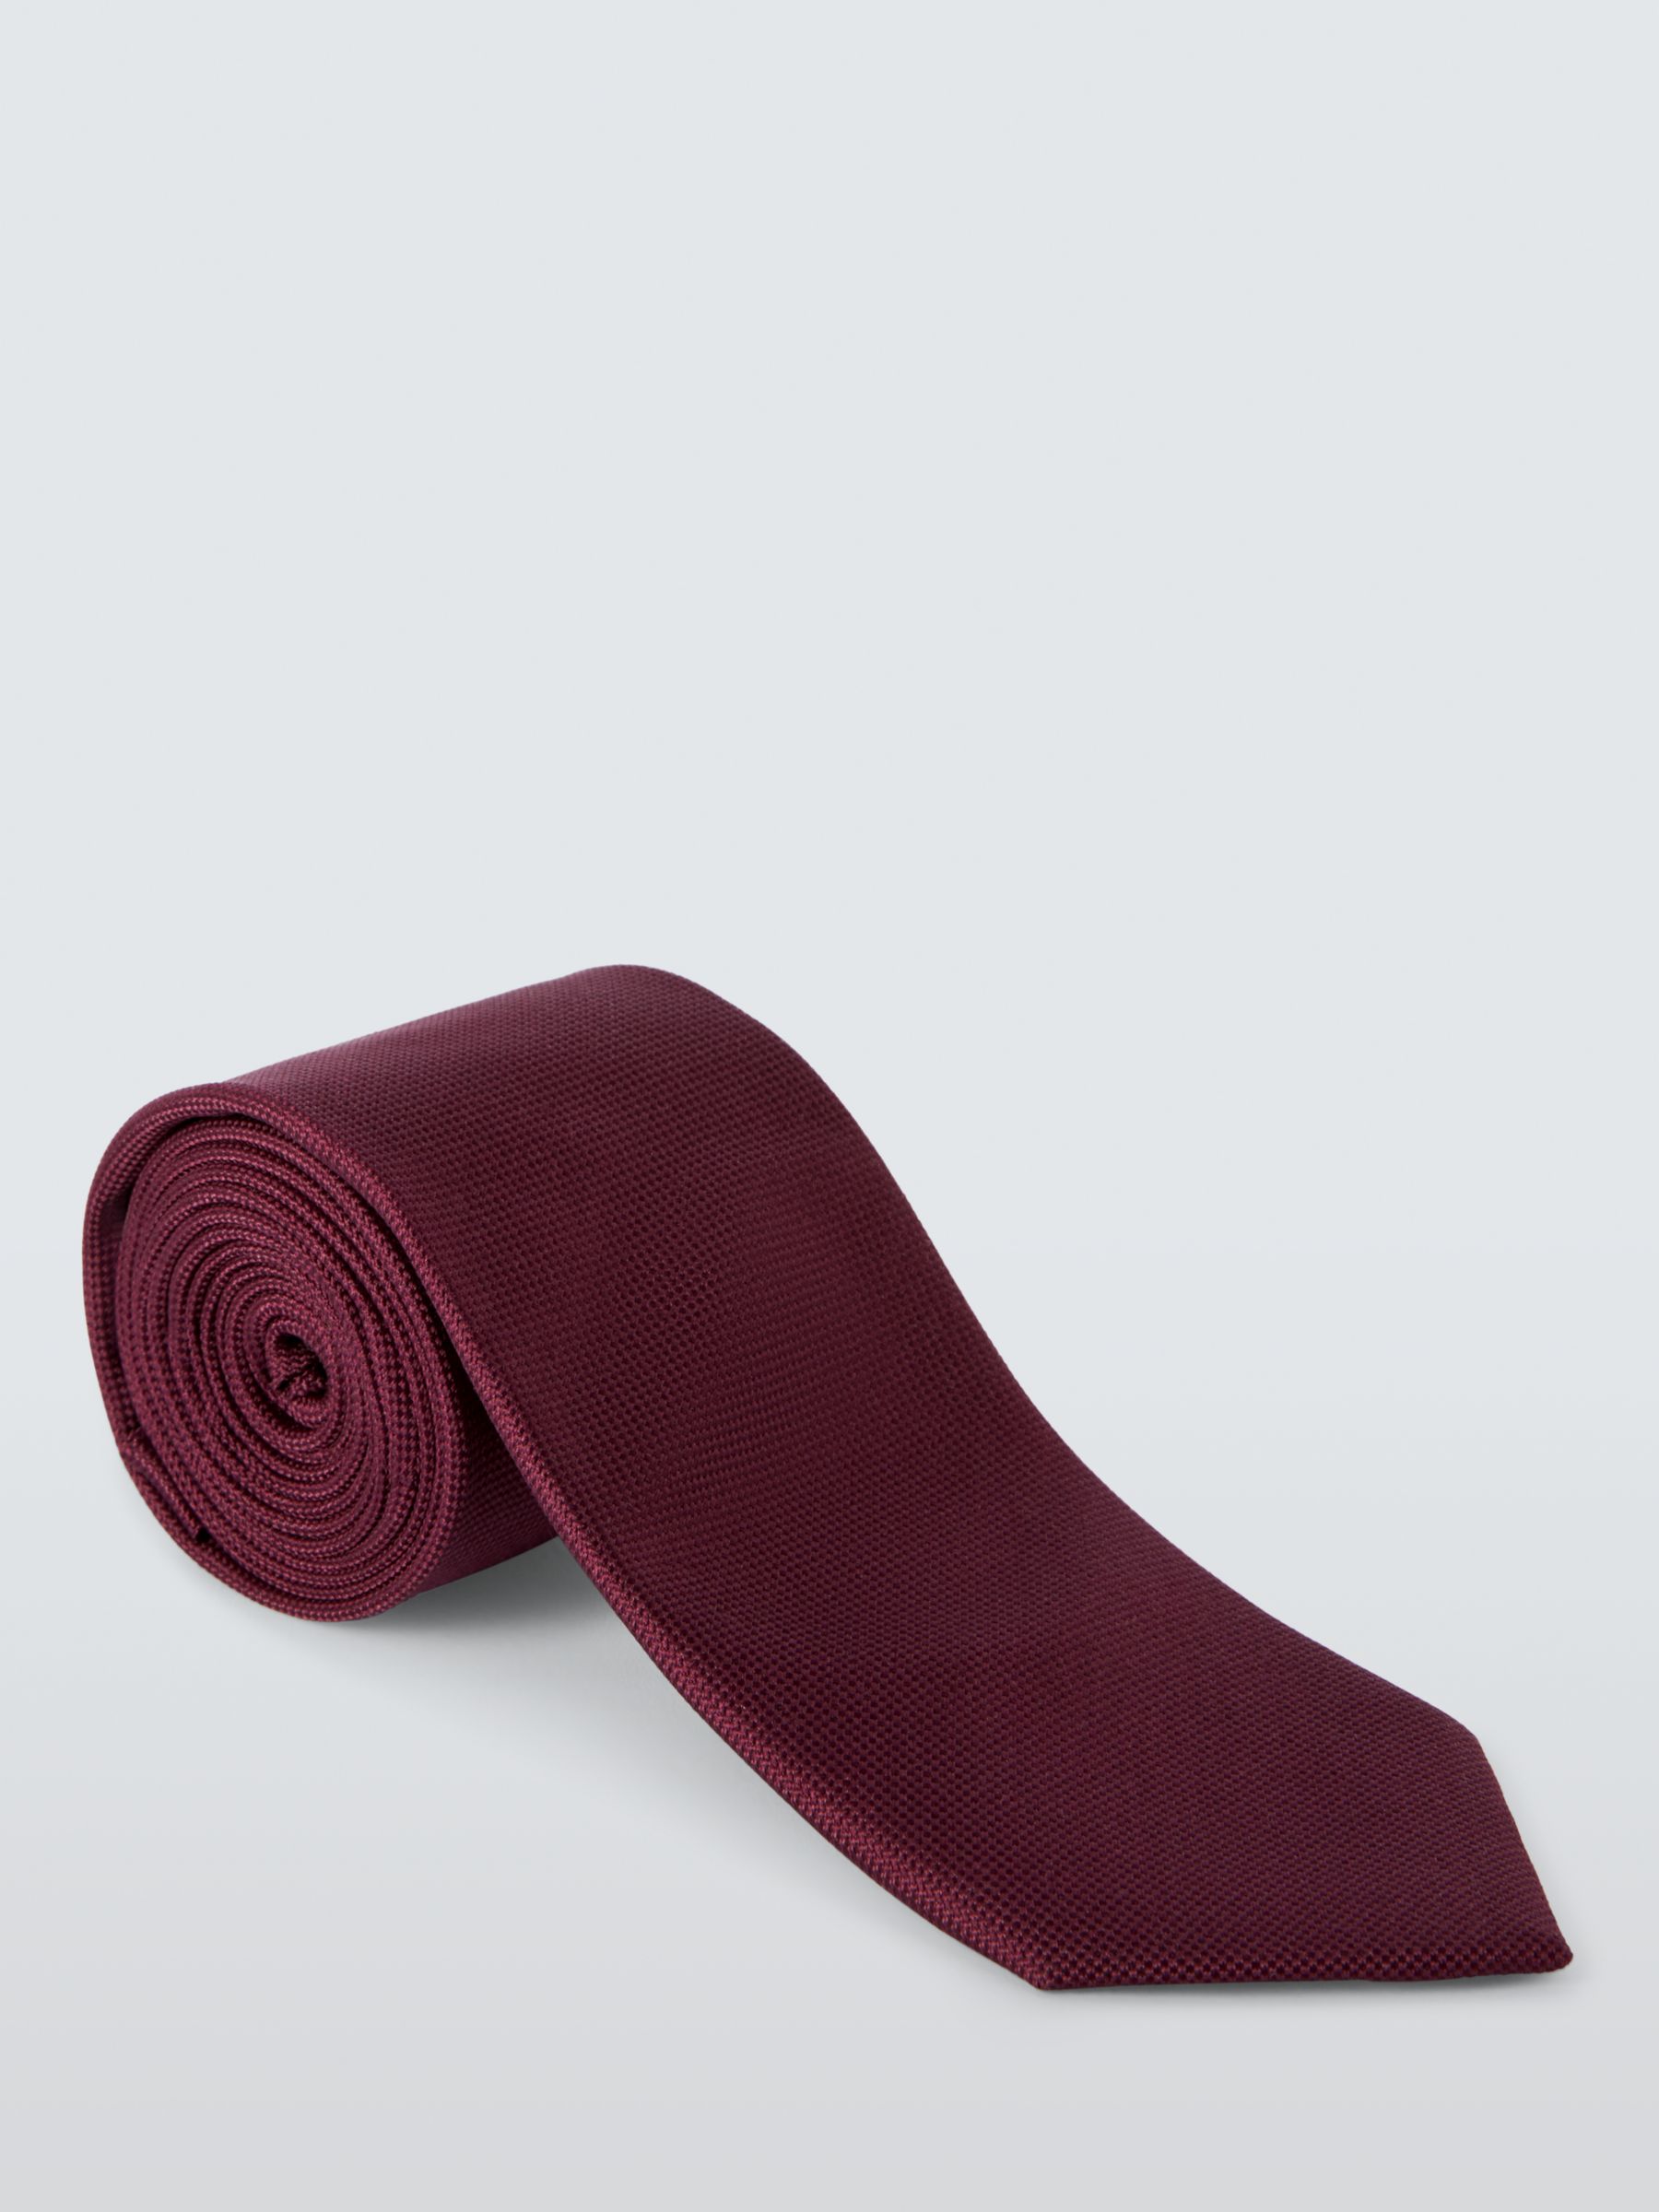 John Lewis Plain Silk Tie, Burgundy at John Lewis & Partners